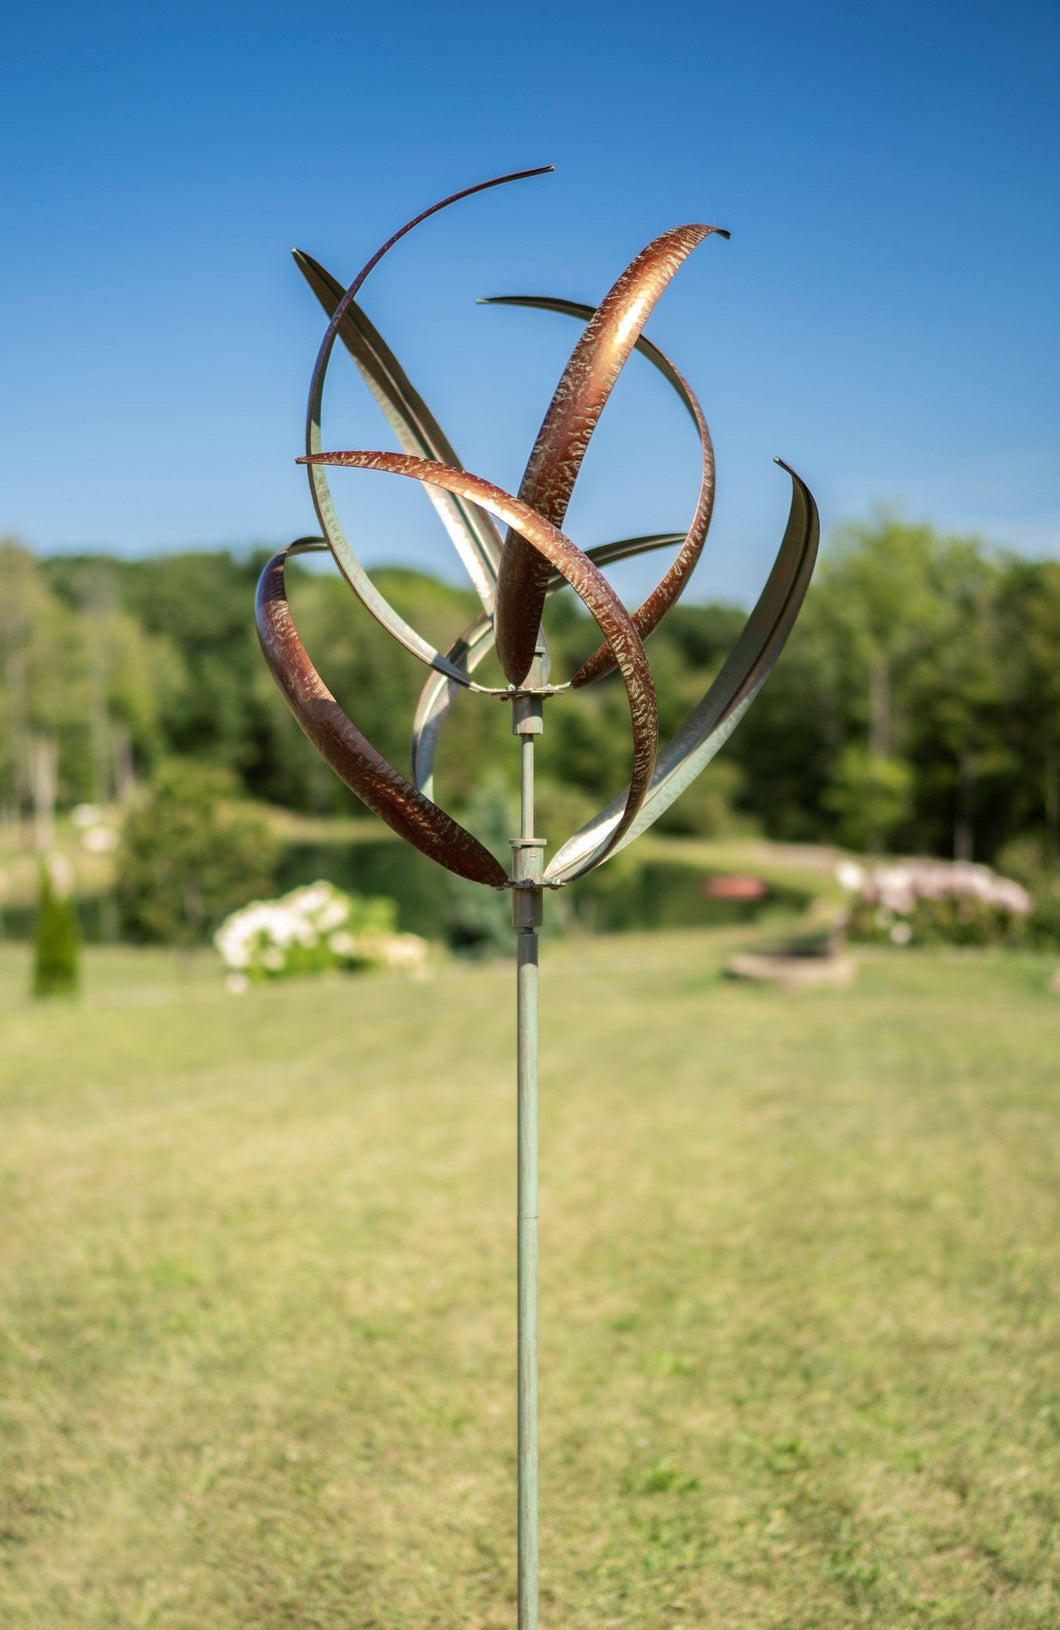 Cheyenne cooper Verde Kinetic Garden Wind Spinner Sculpture Garden Art HH154